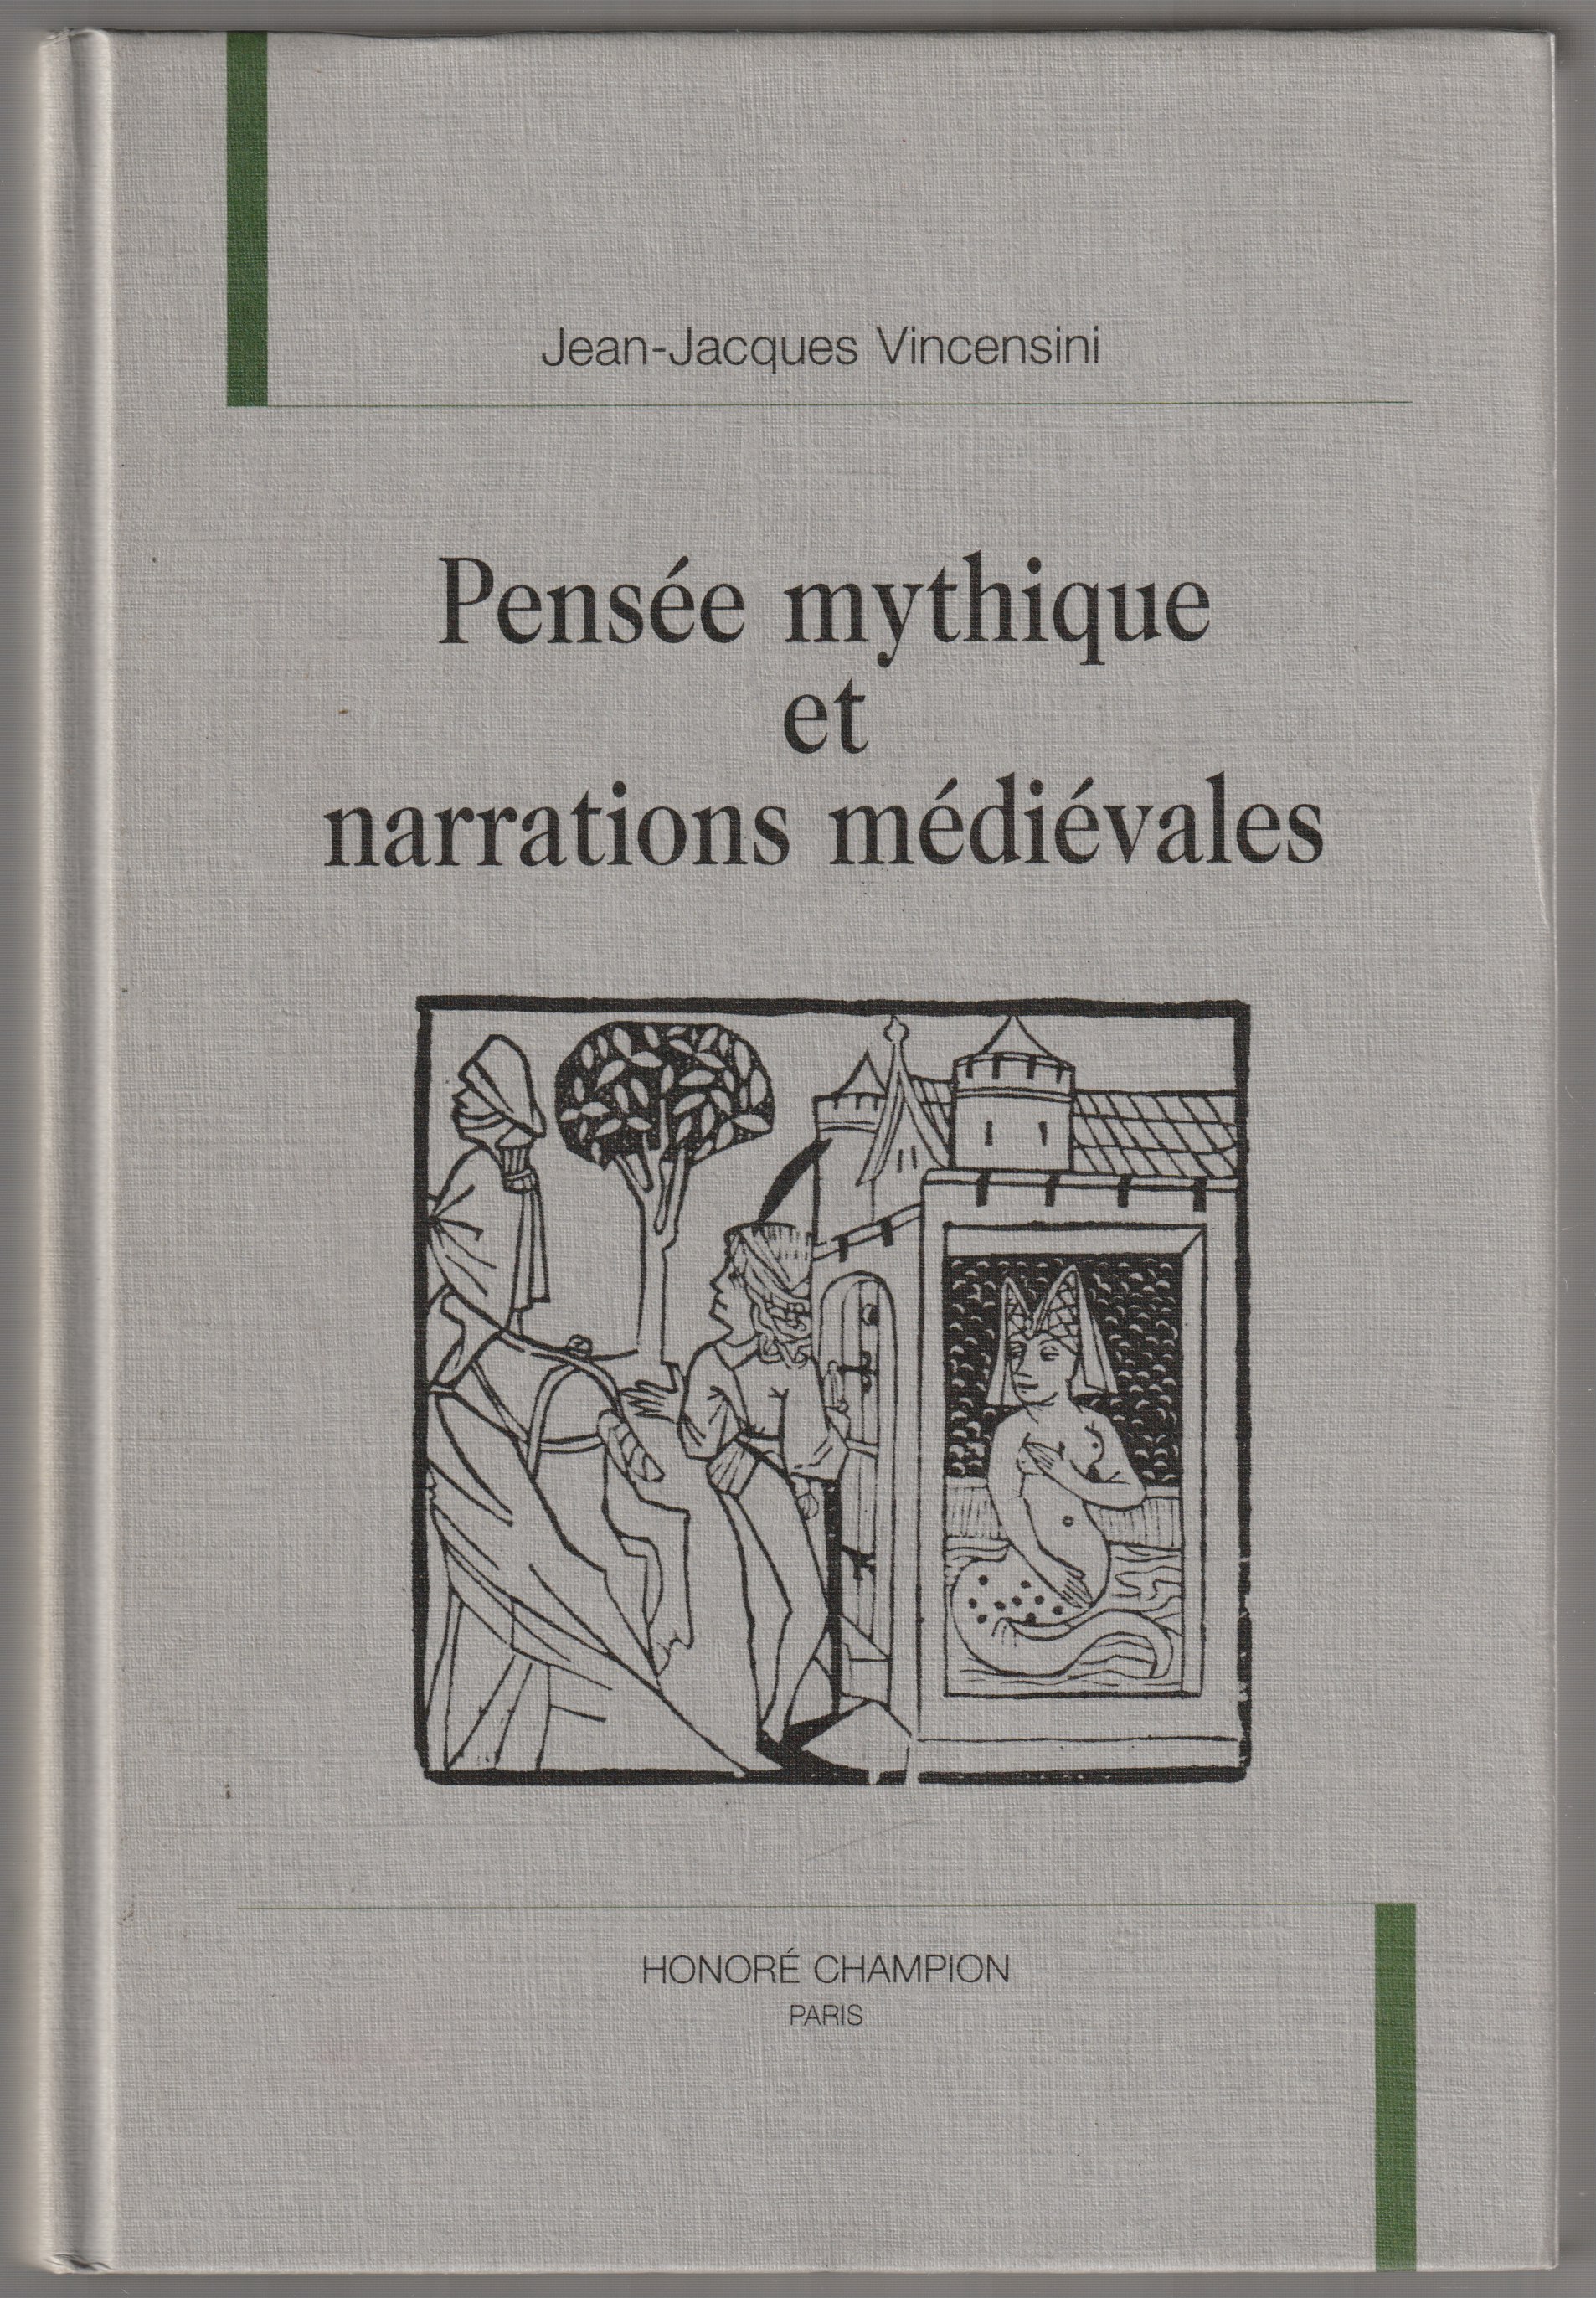 Pensee mythique et narrations medievales.